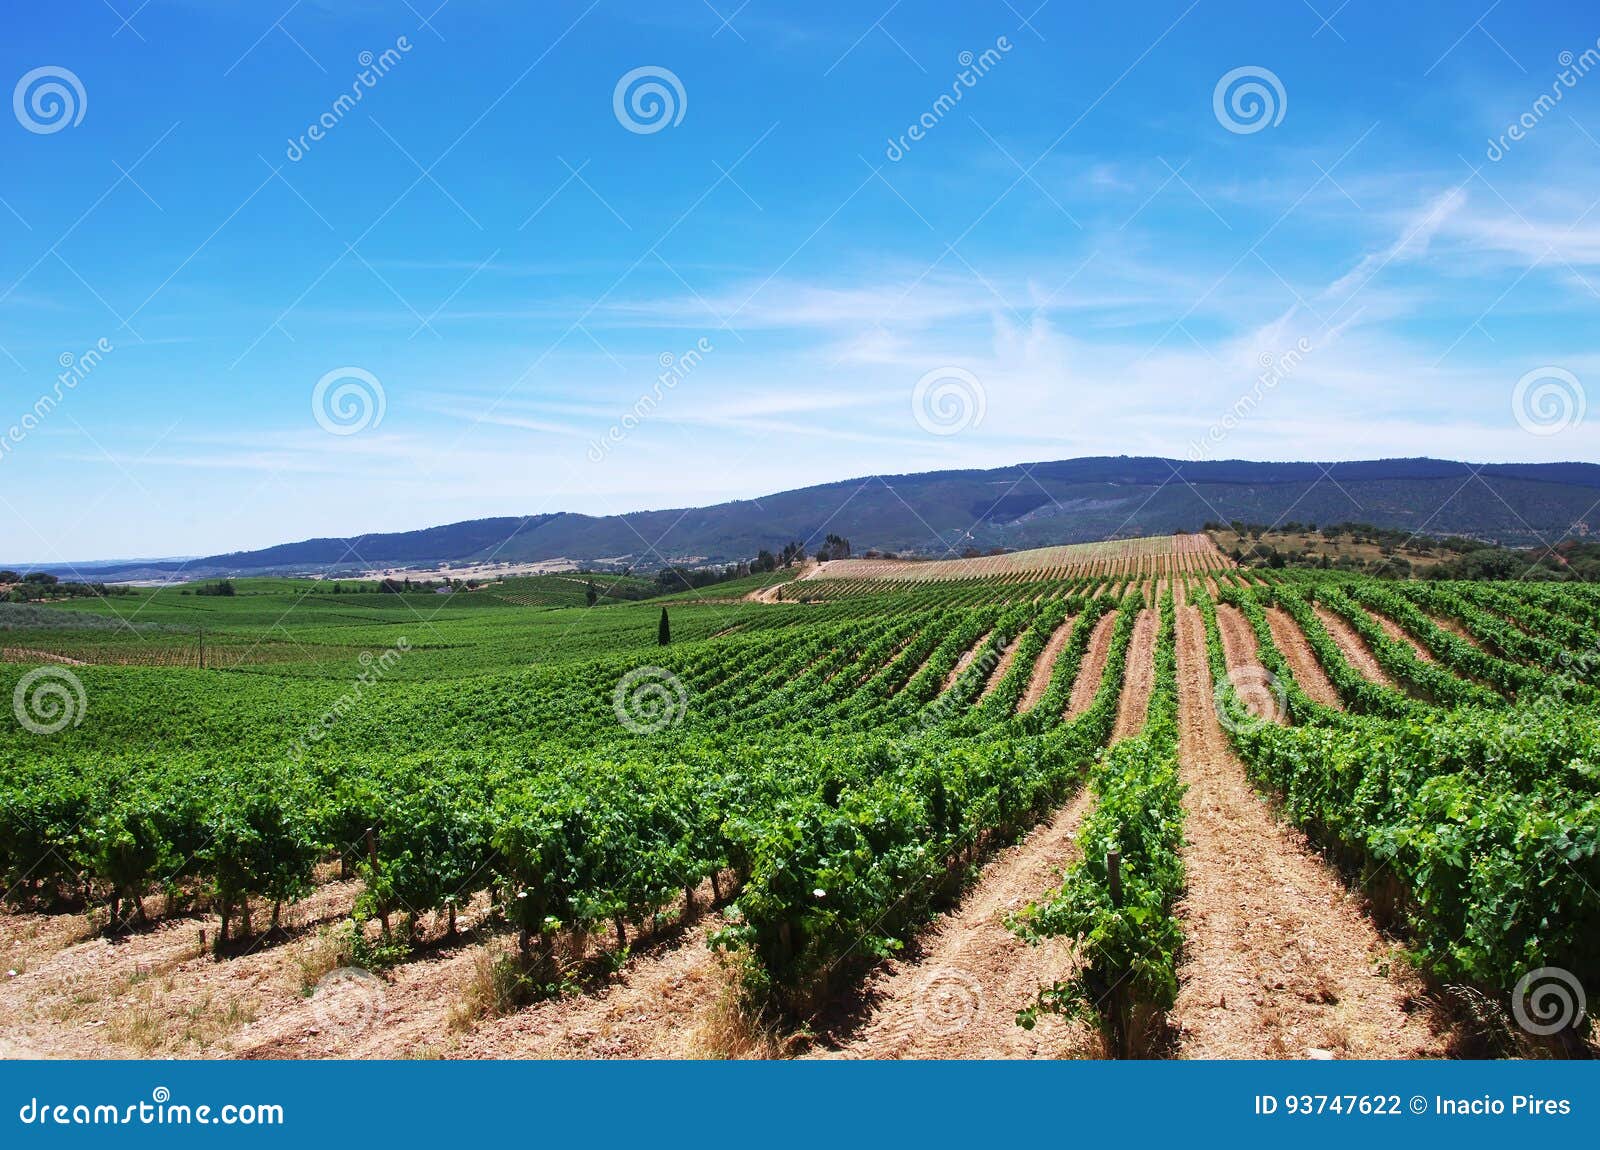 vineyard plantation in the alentejo region